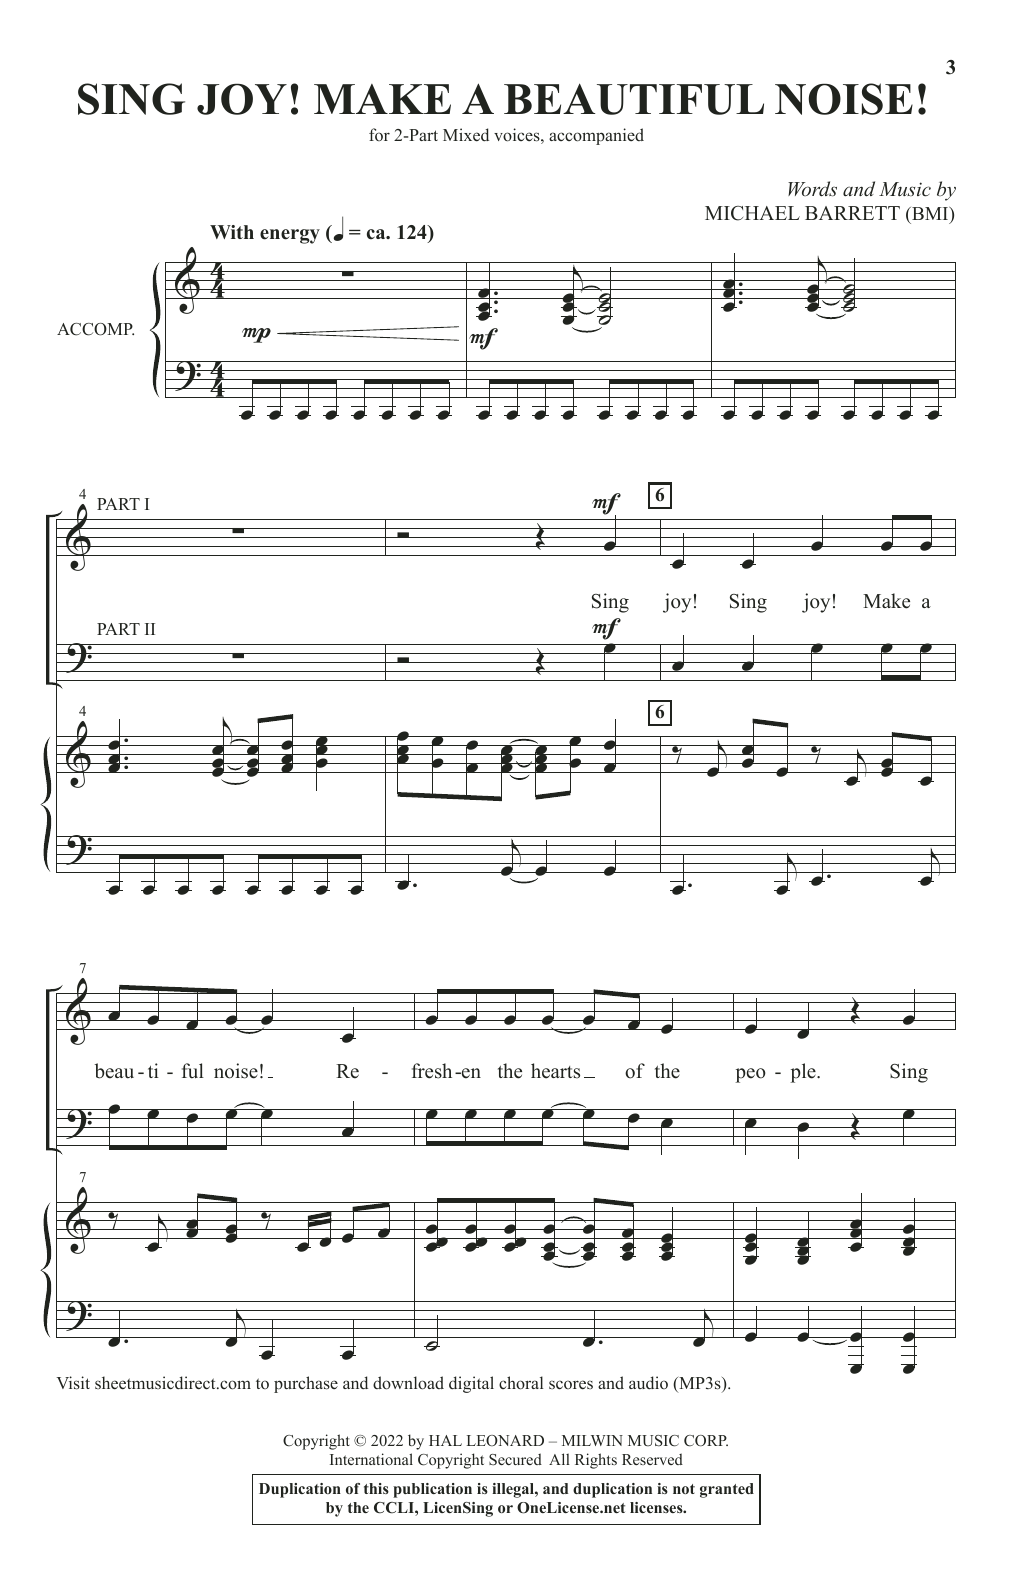 Michael Barrett Sing Joy! Make A Beautiful Noise! Sheet Music Notes & Chords for 2-Part Choir - Download or Print PDF